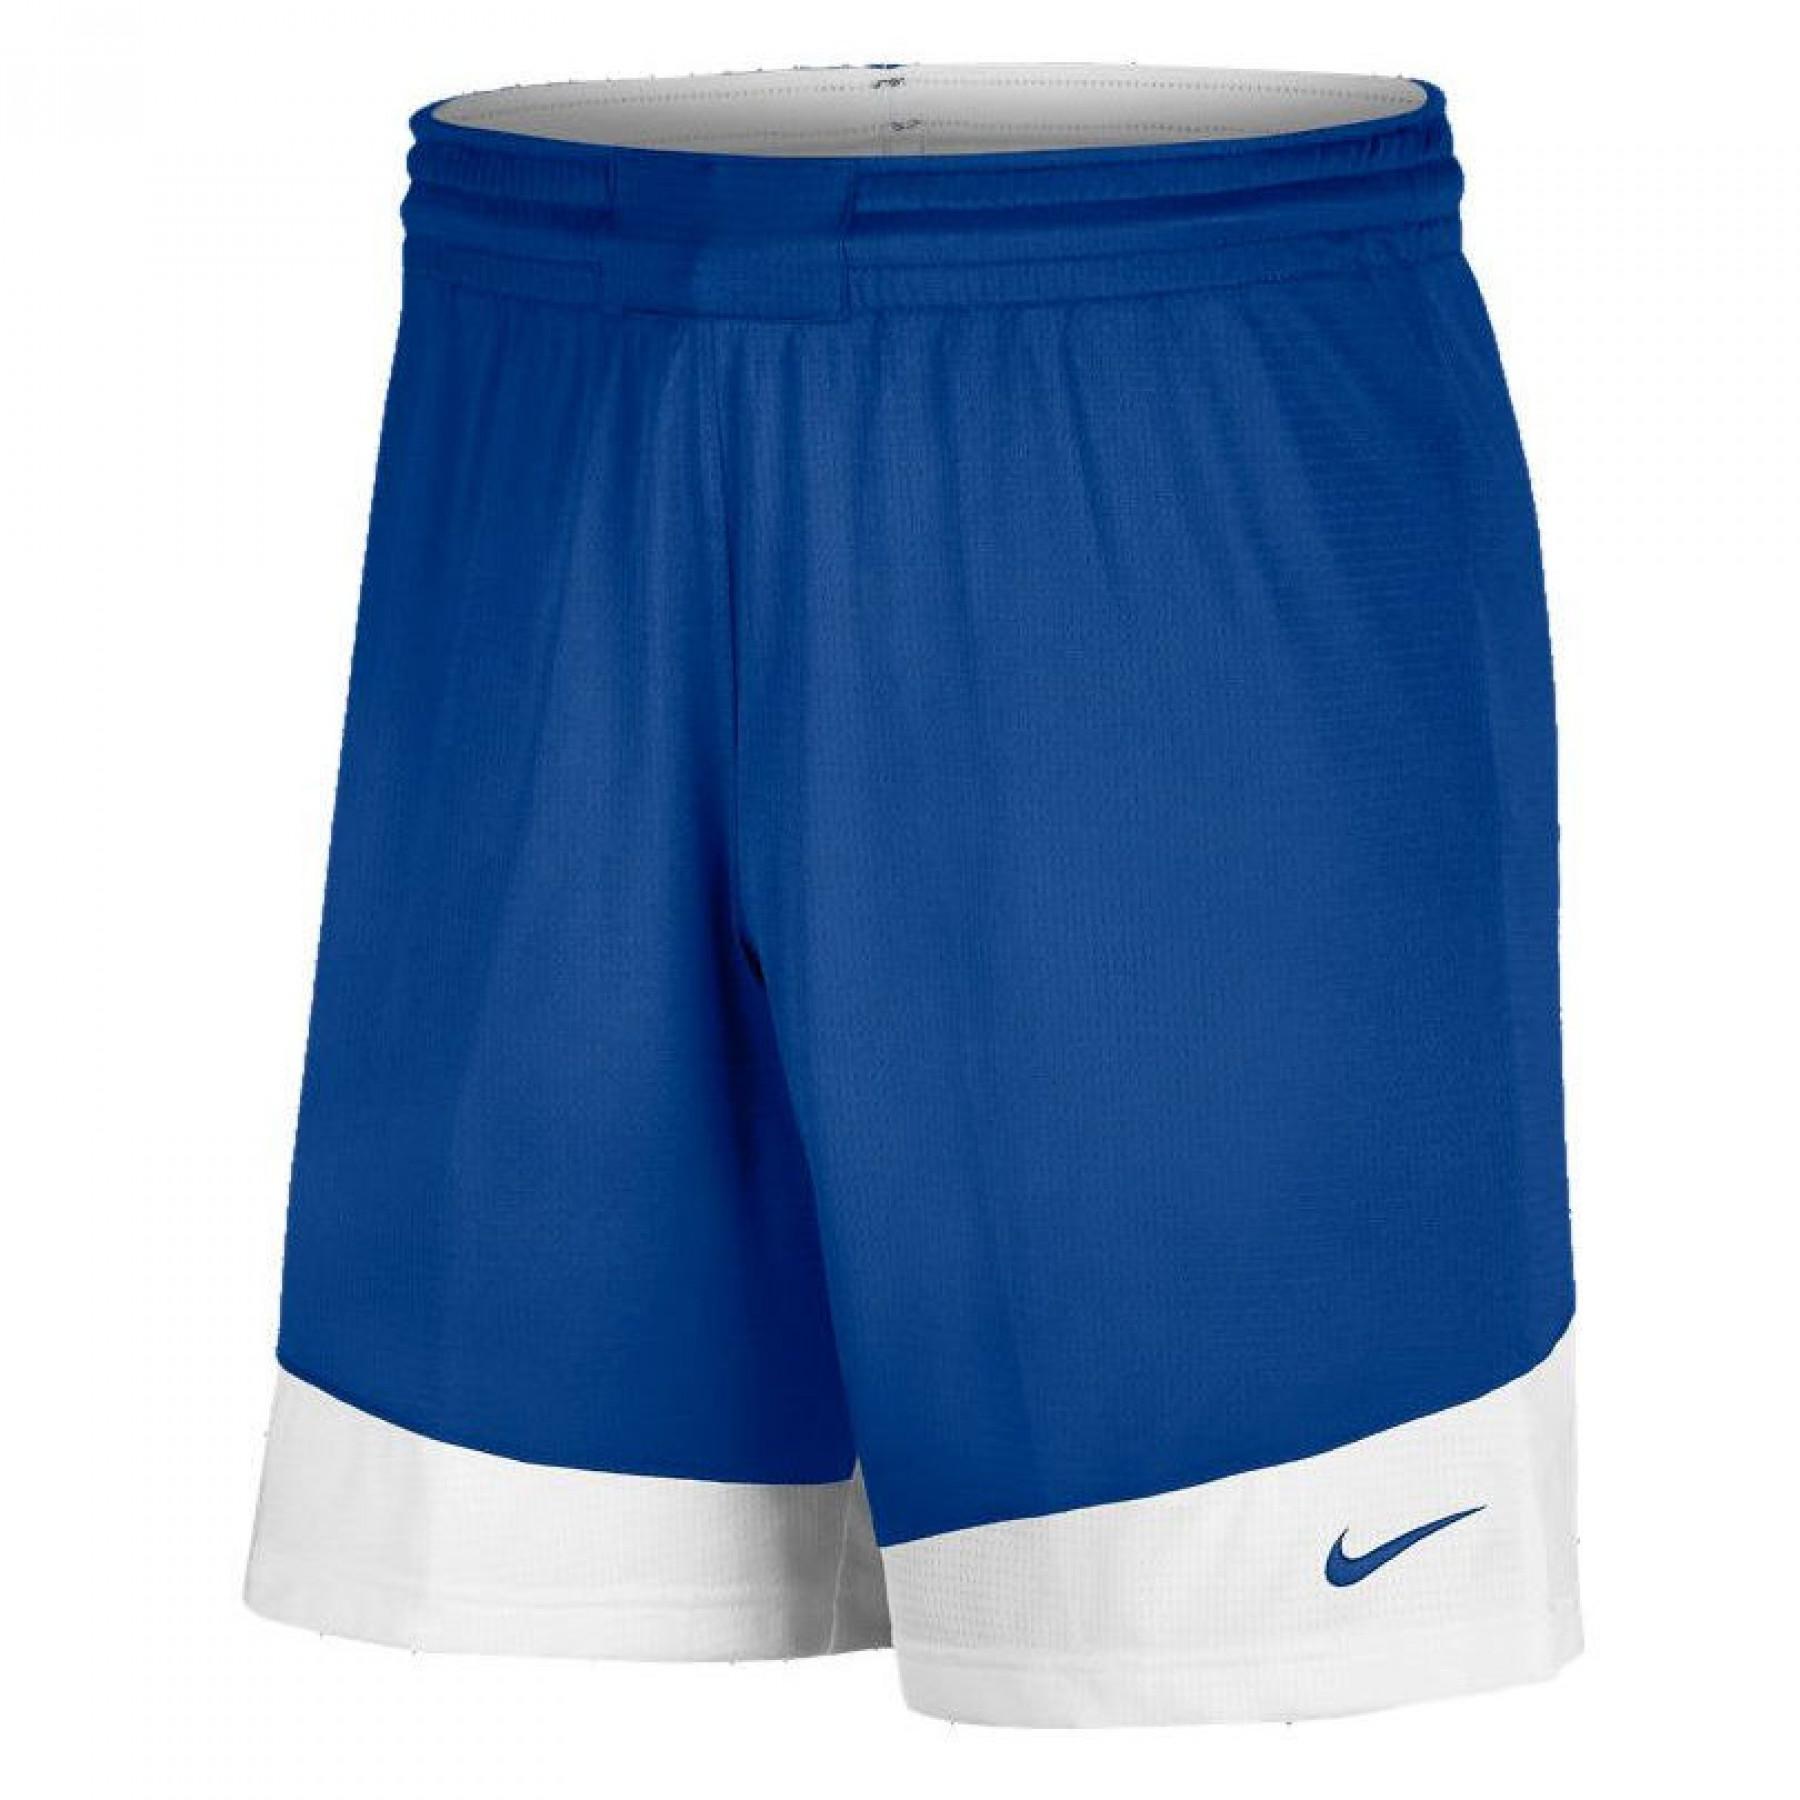 Children's shorts Nike Basketball